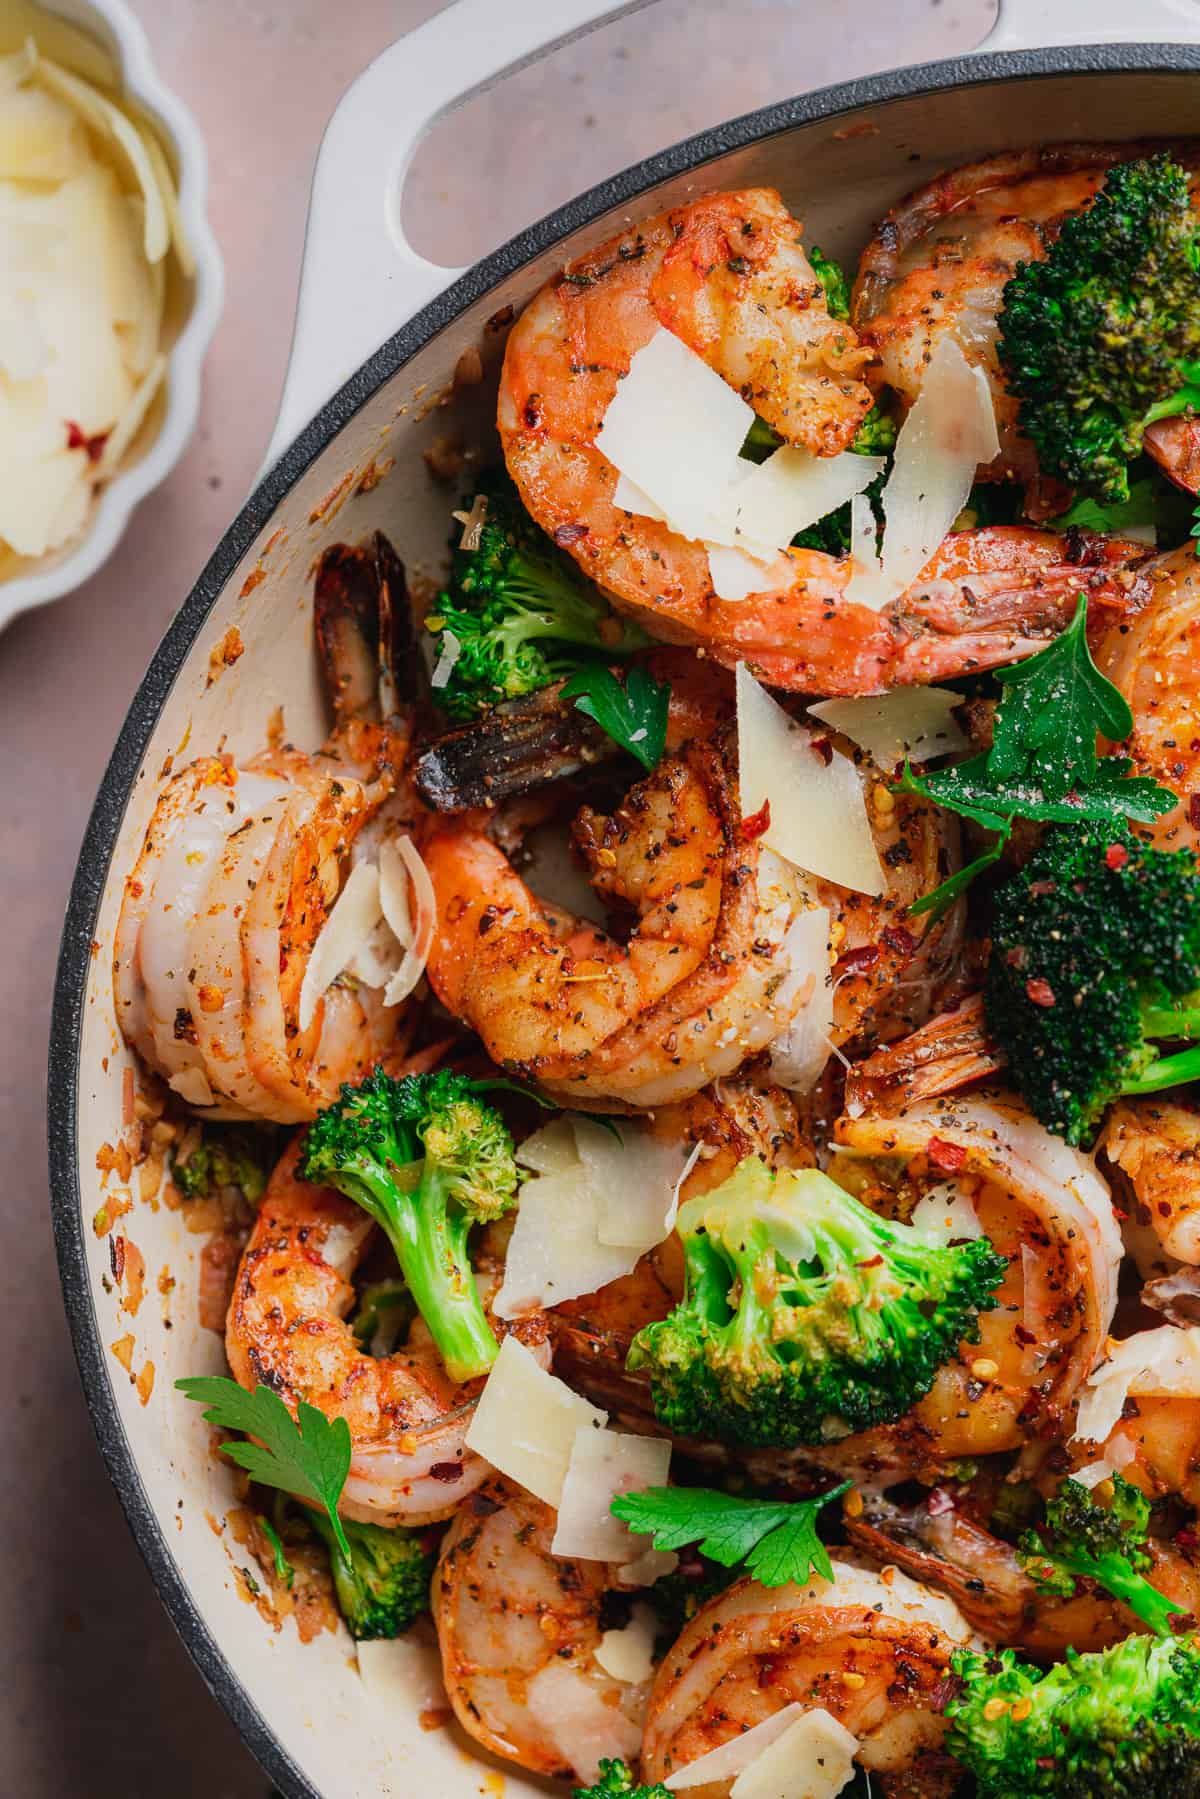 Gluten-free shrimp and broccoli